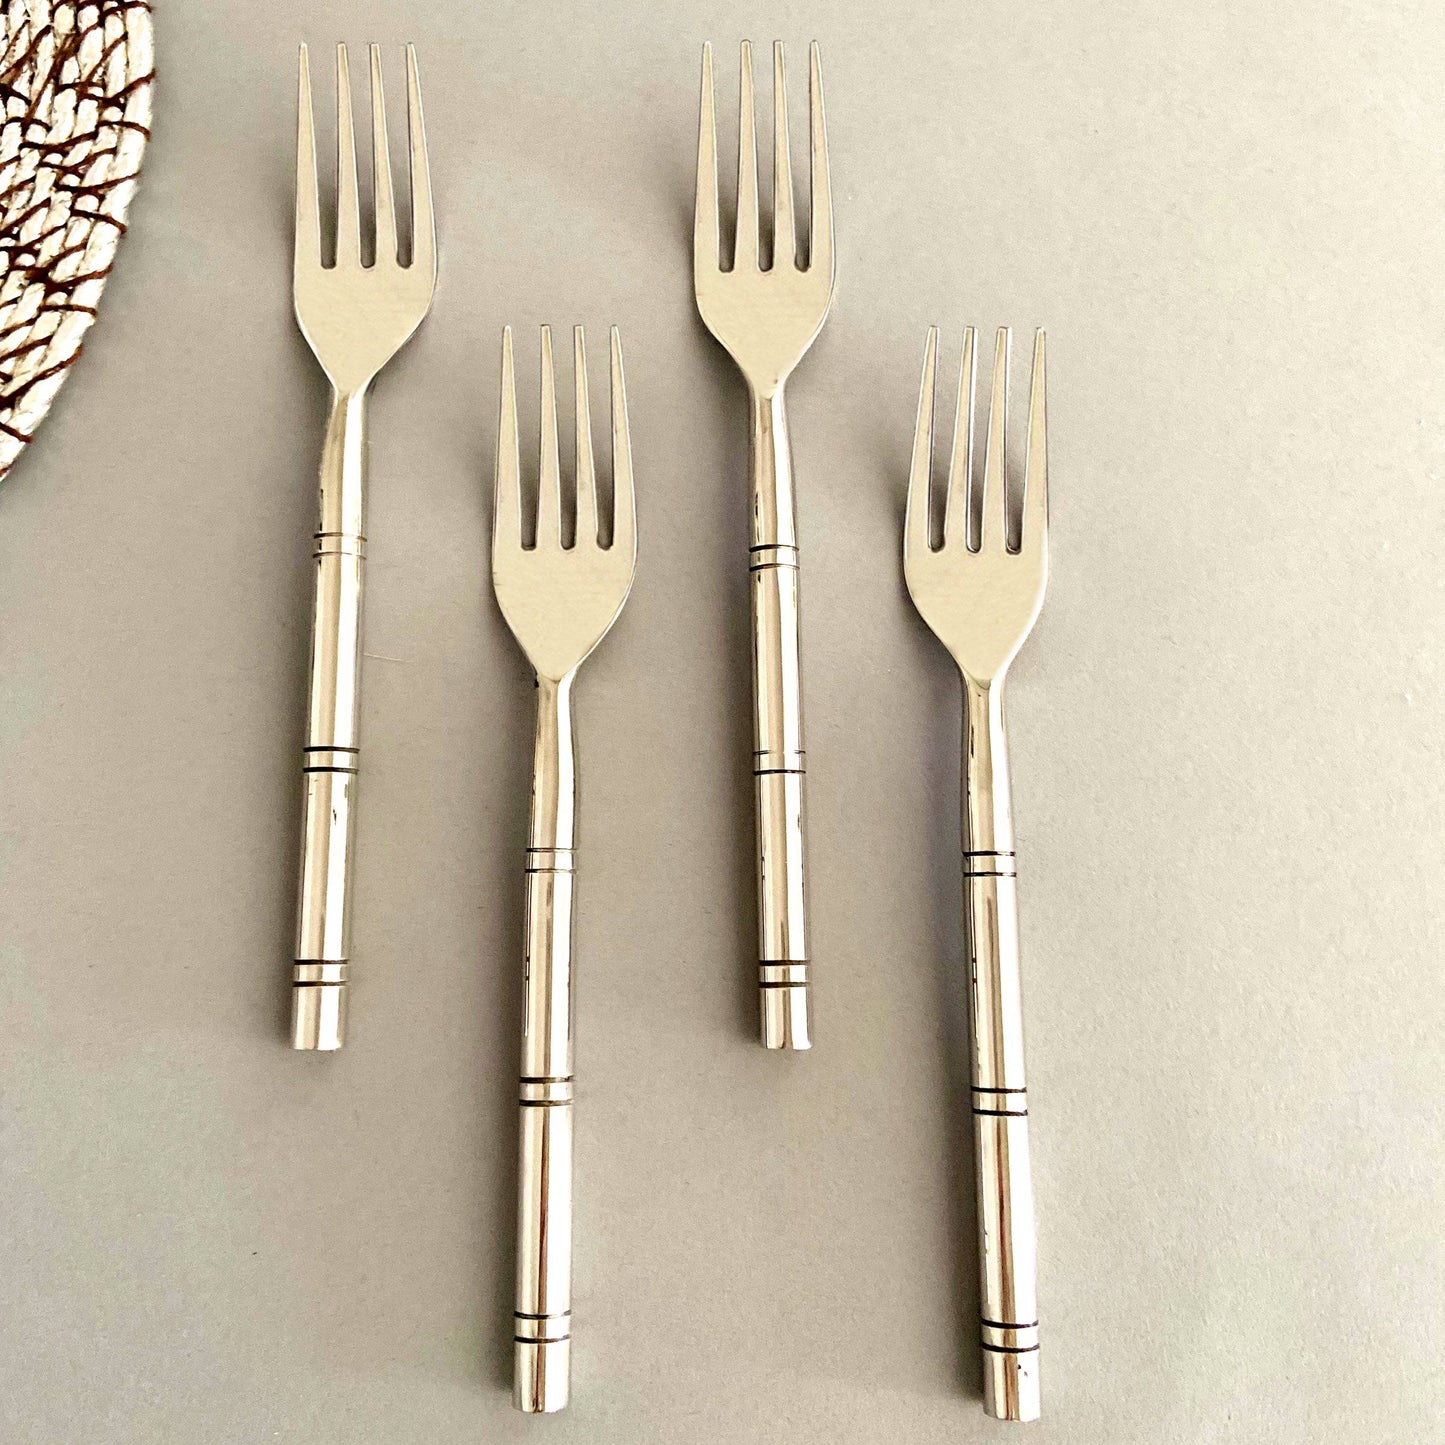 Modern Glossy Dinner Forks set of 4 - The Decor Circle